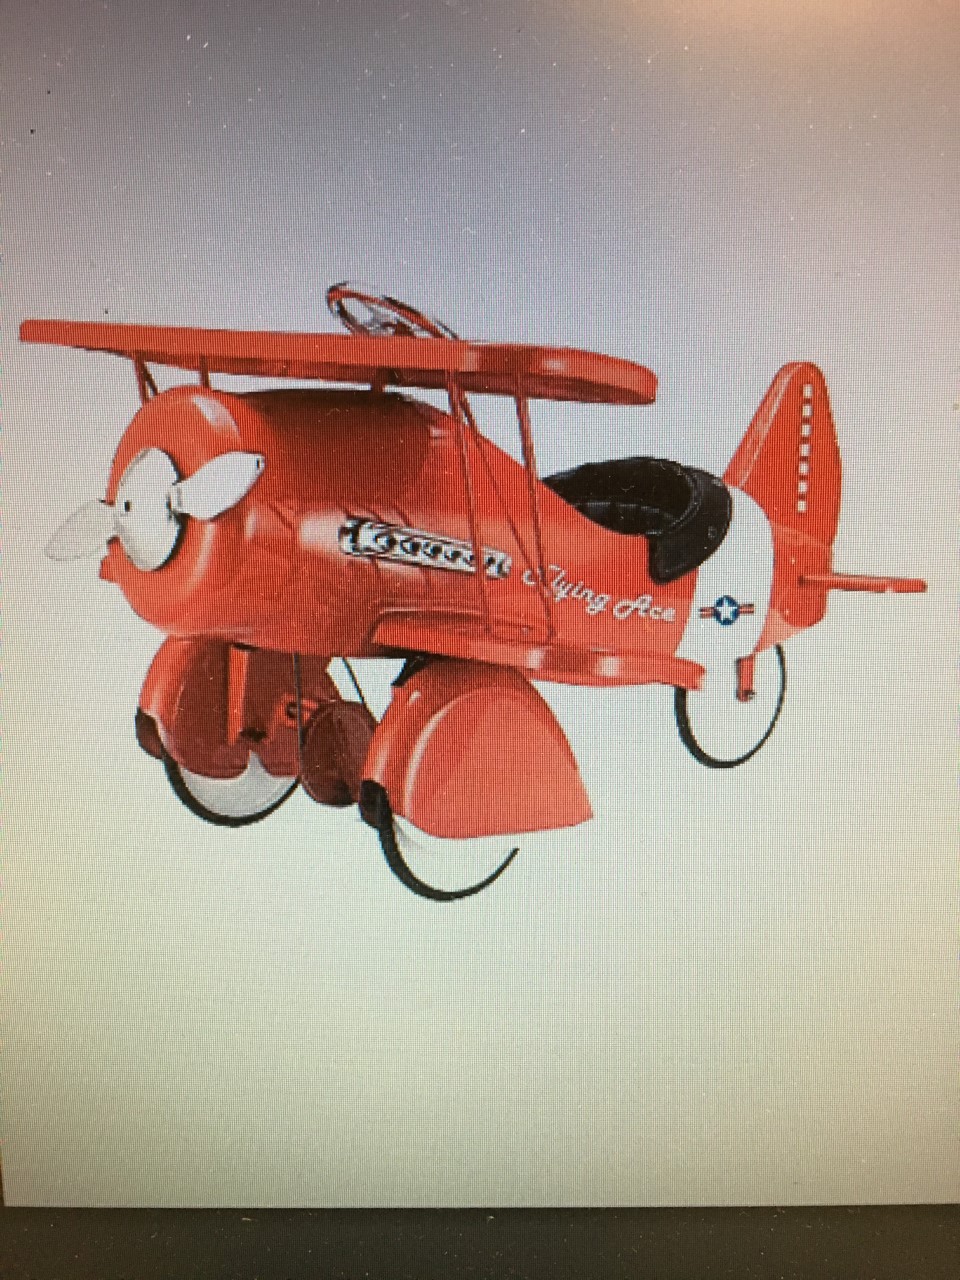 Pibbs - Airplane Kid's Hydraulic Chair